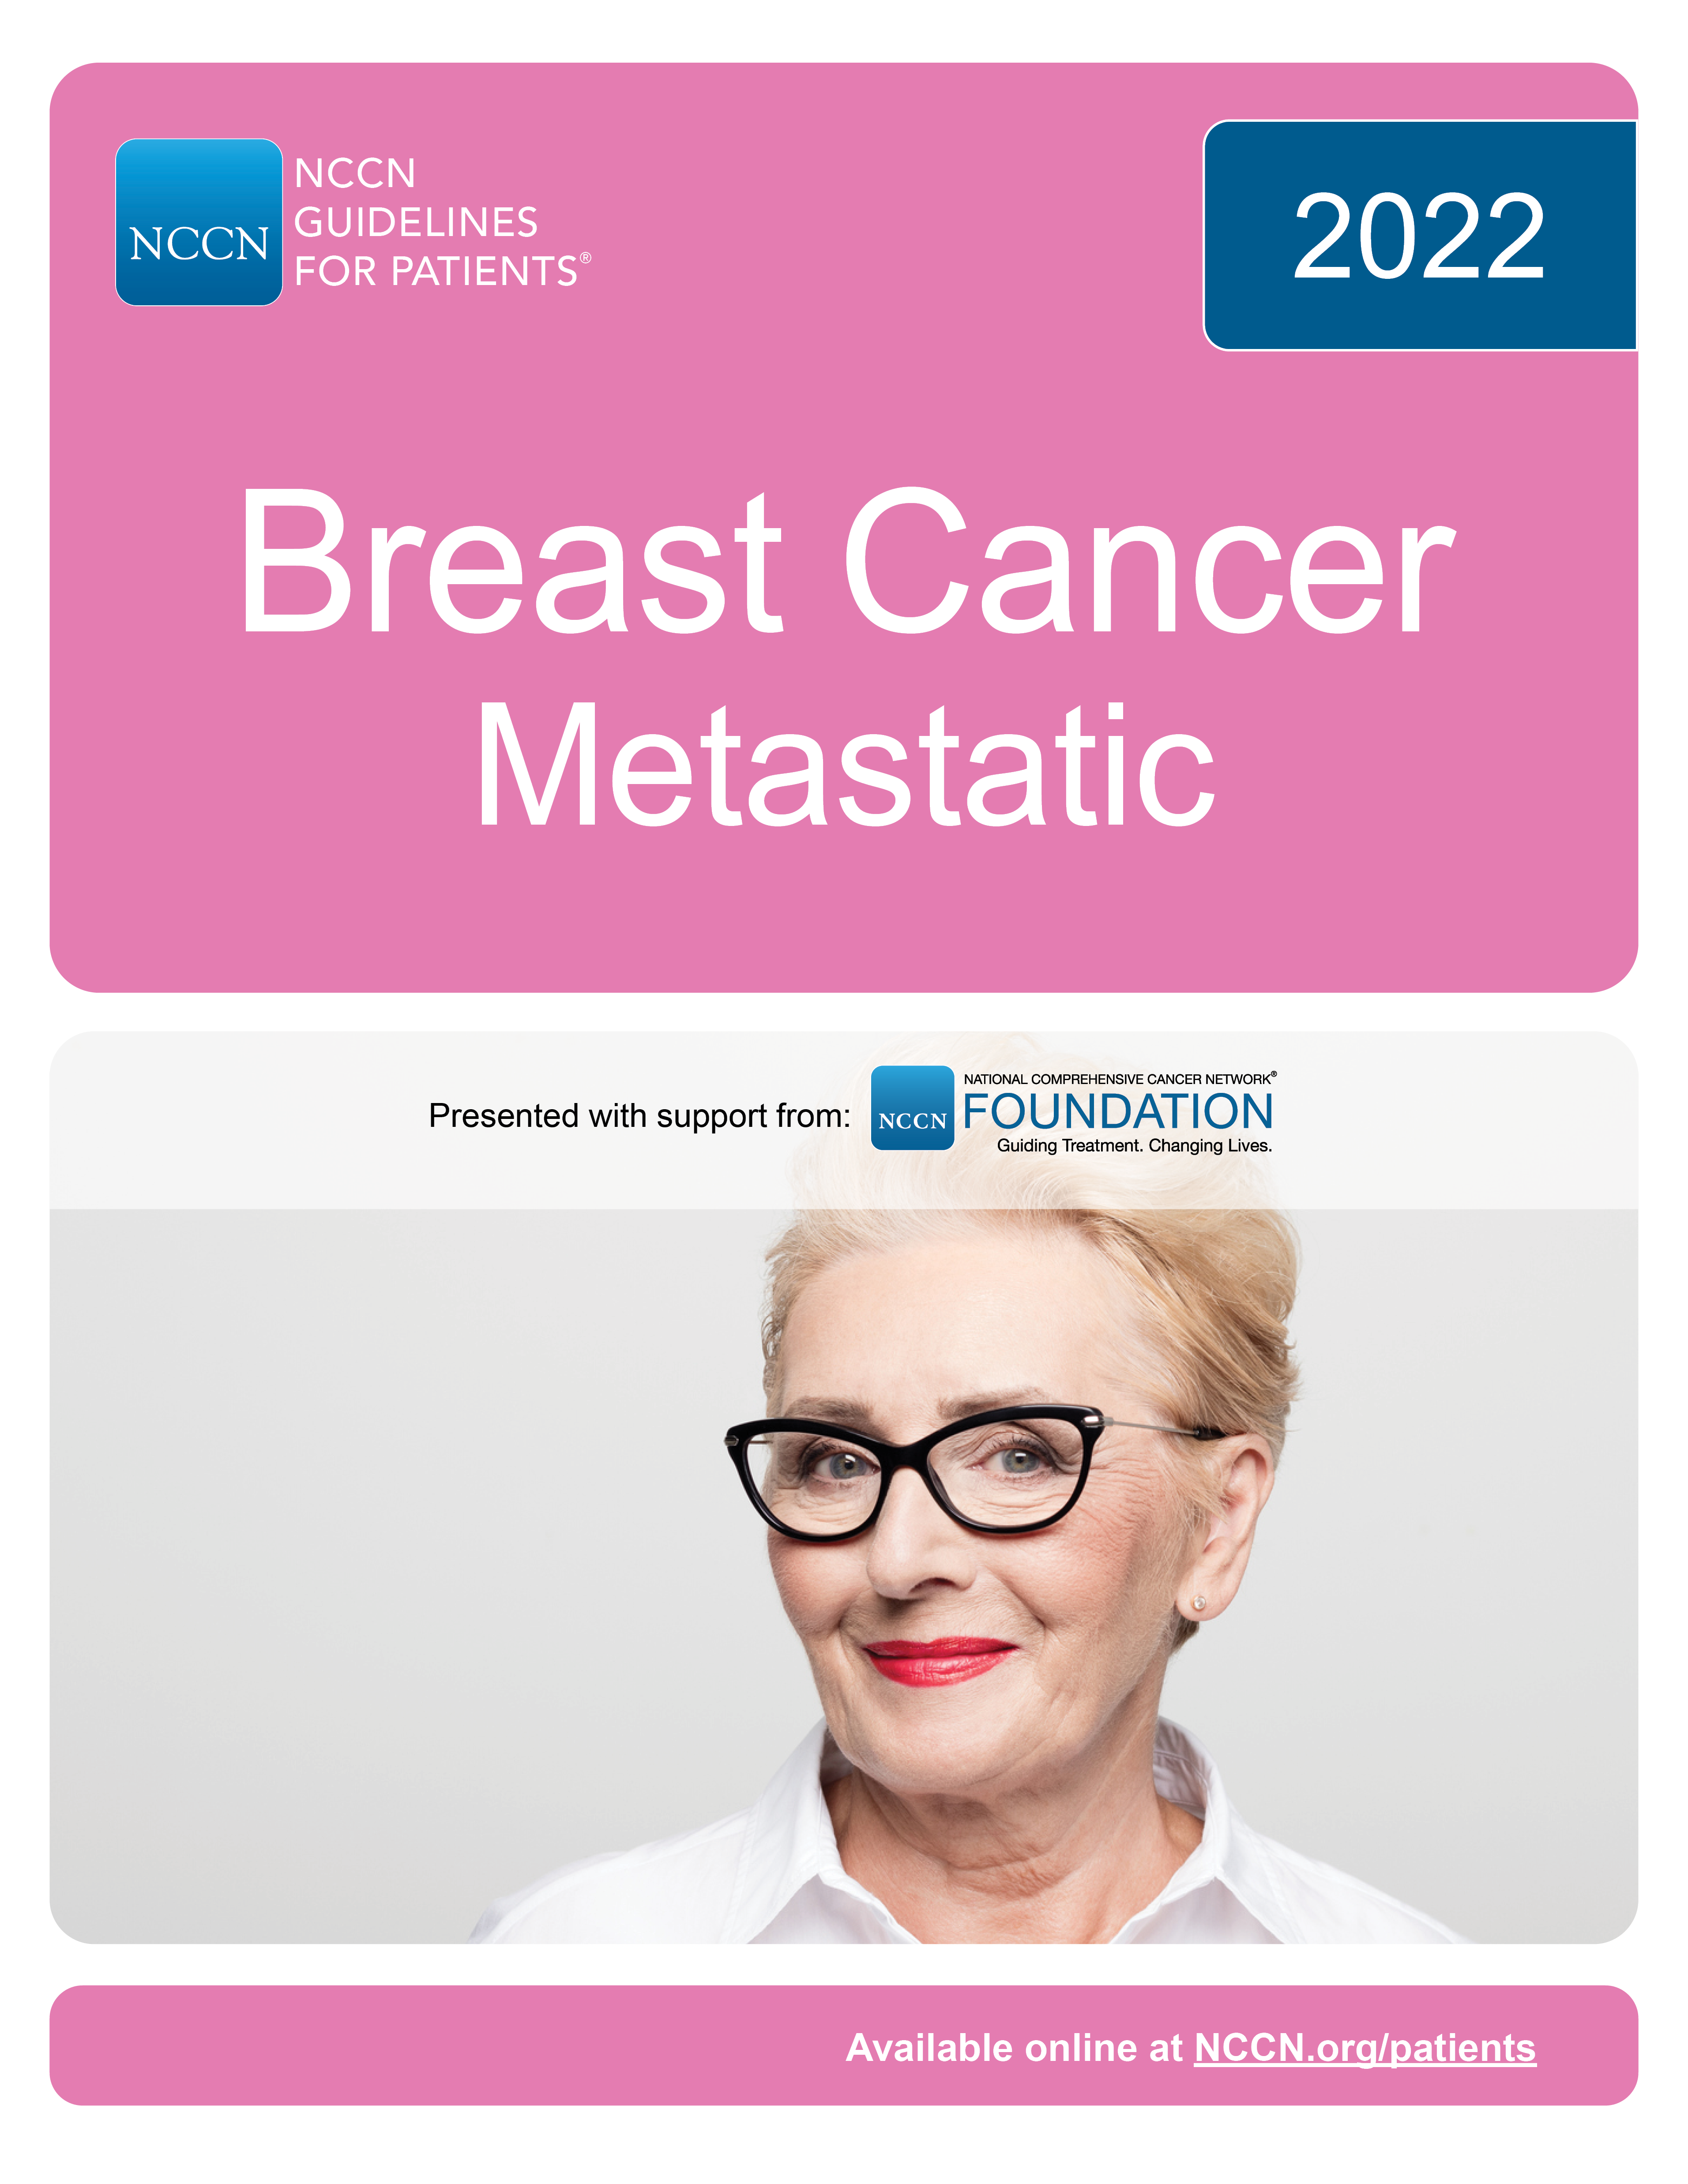 Metastatic Breast Cancer Network